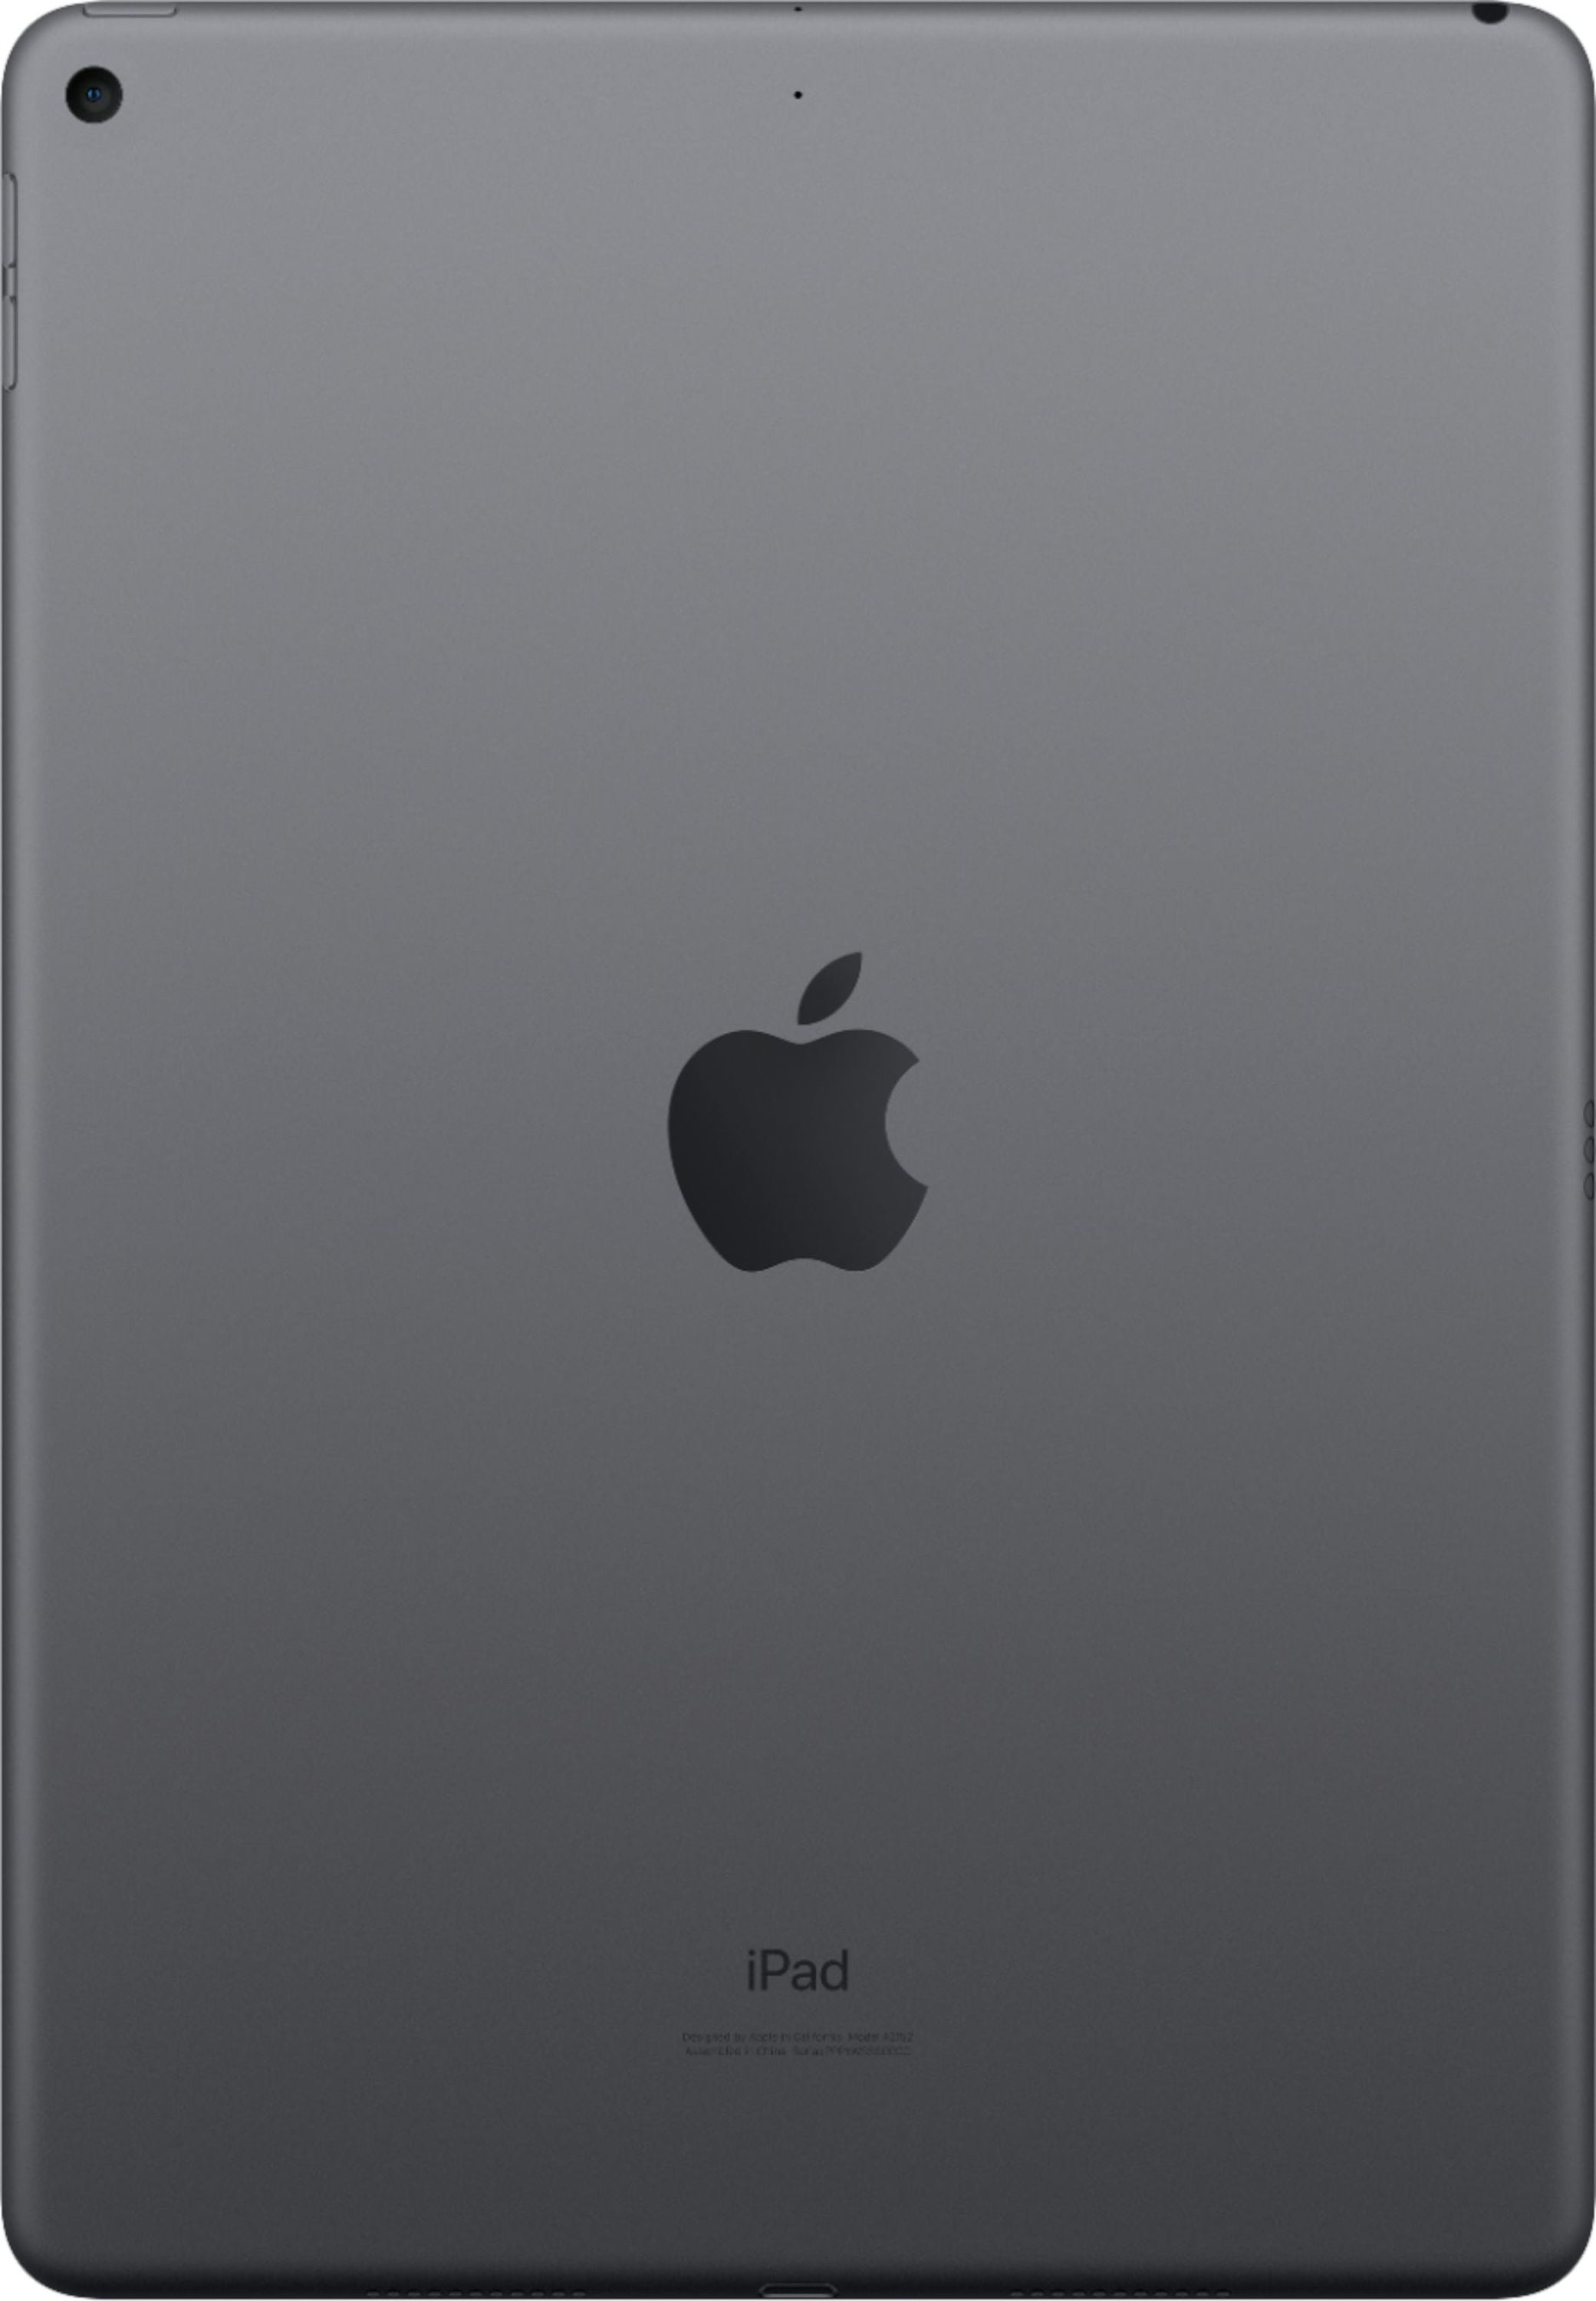 Apple iPad Air 3 64GB Wi-Fi Tablet (MUUJ2LL/A) - Space Gray